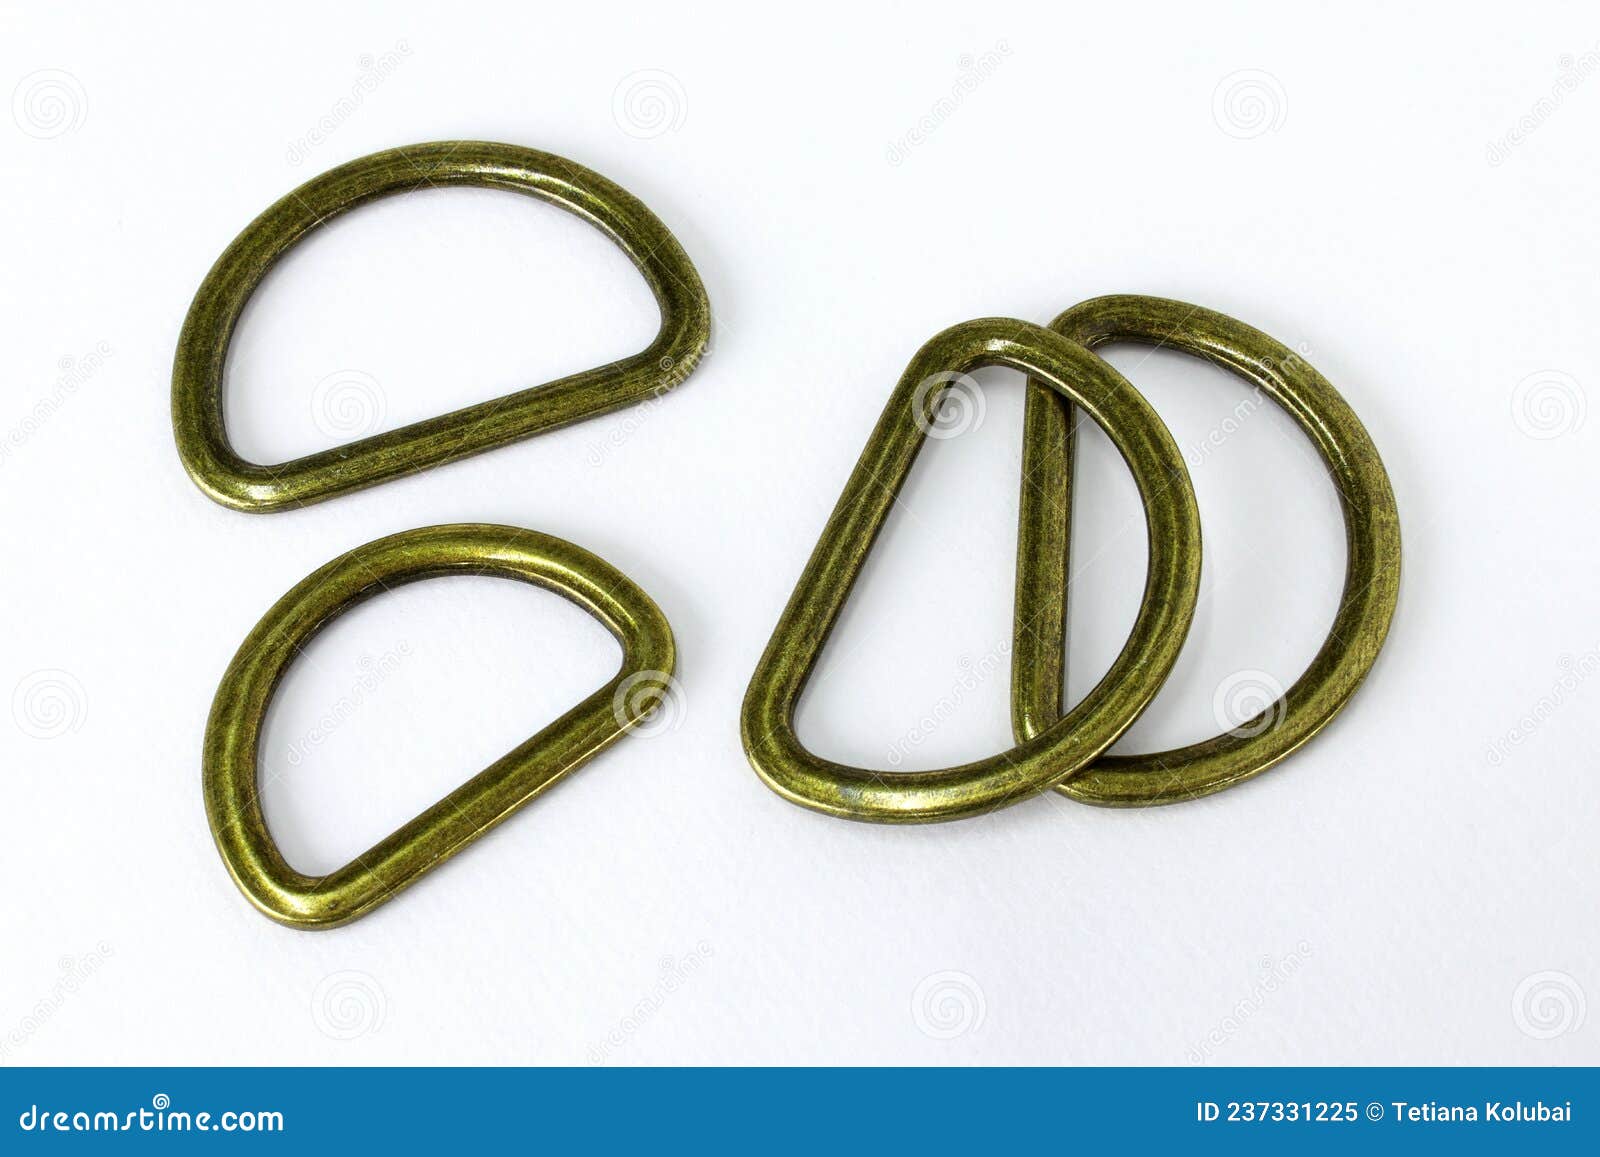 tia d ring buckle strap semi circular close up white background d shaped loop small half ring d ring purse bag making 237331225